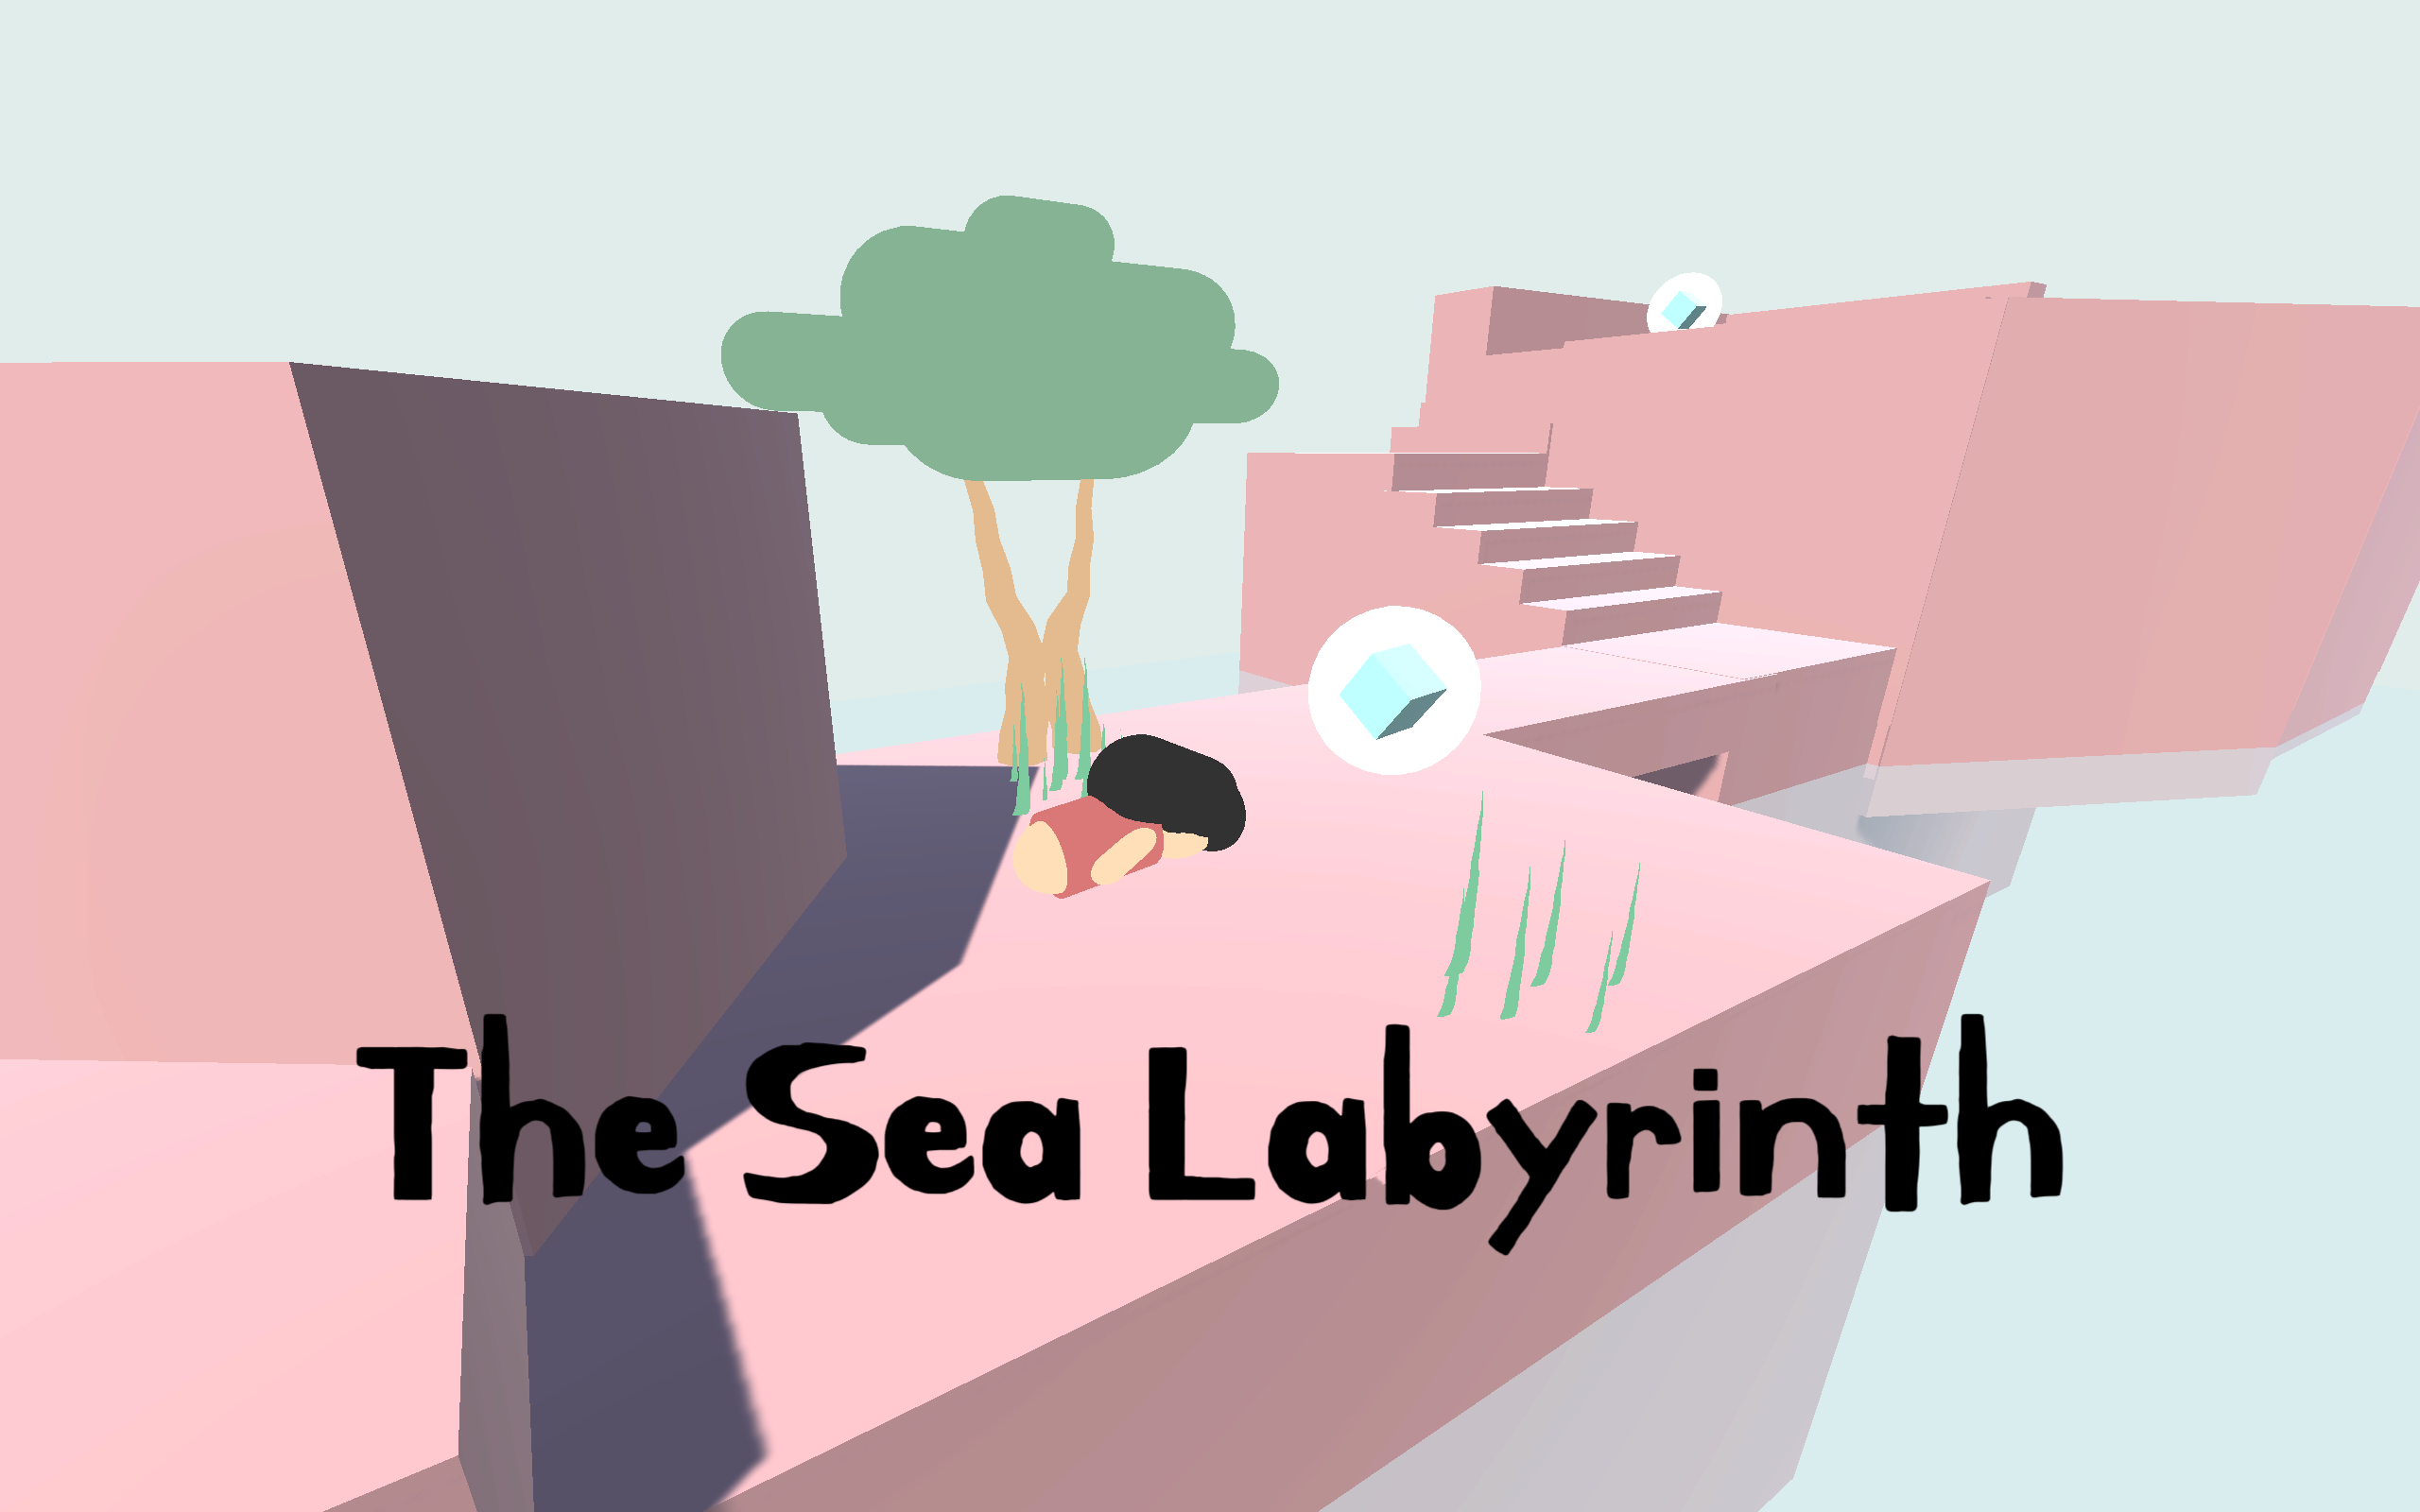 The Sea Labyrinth